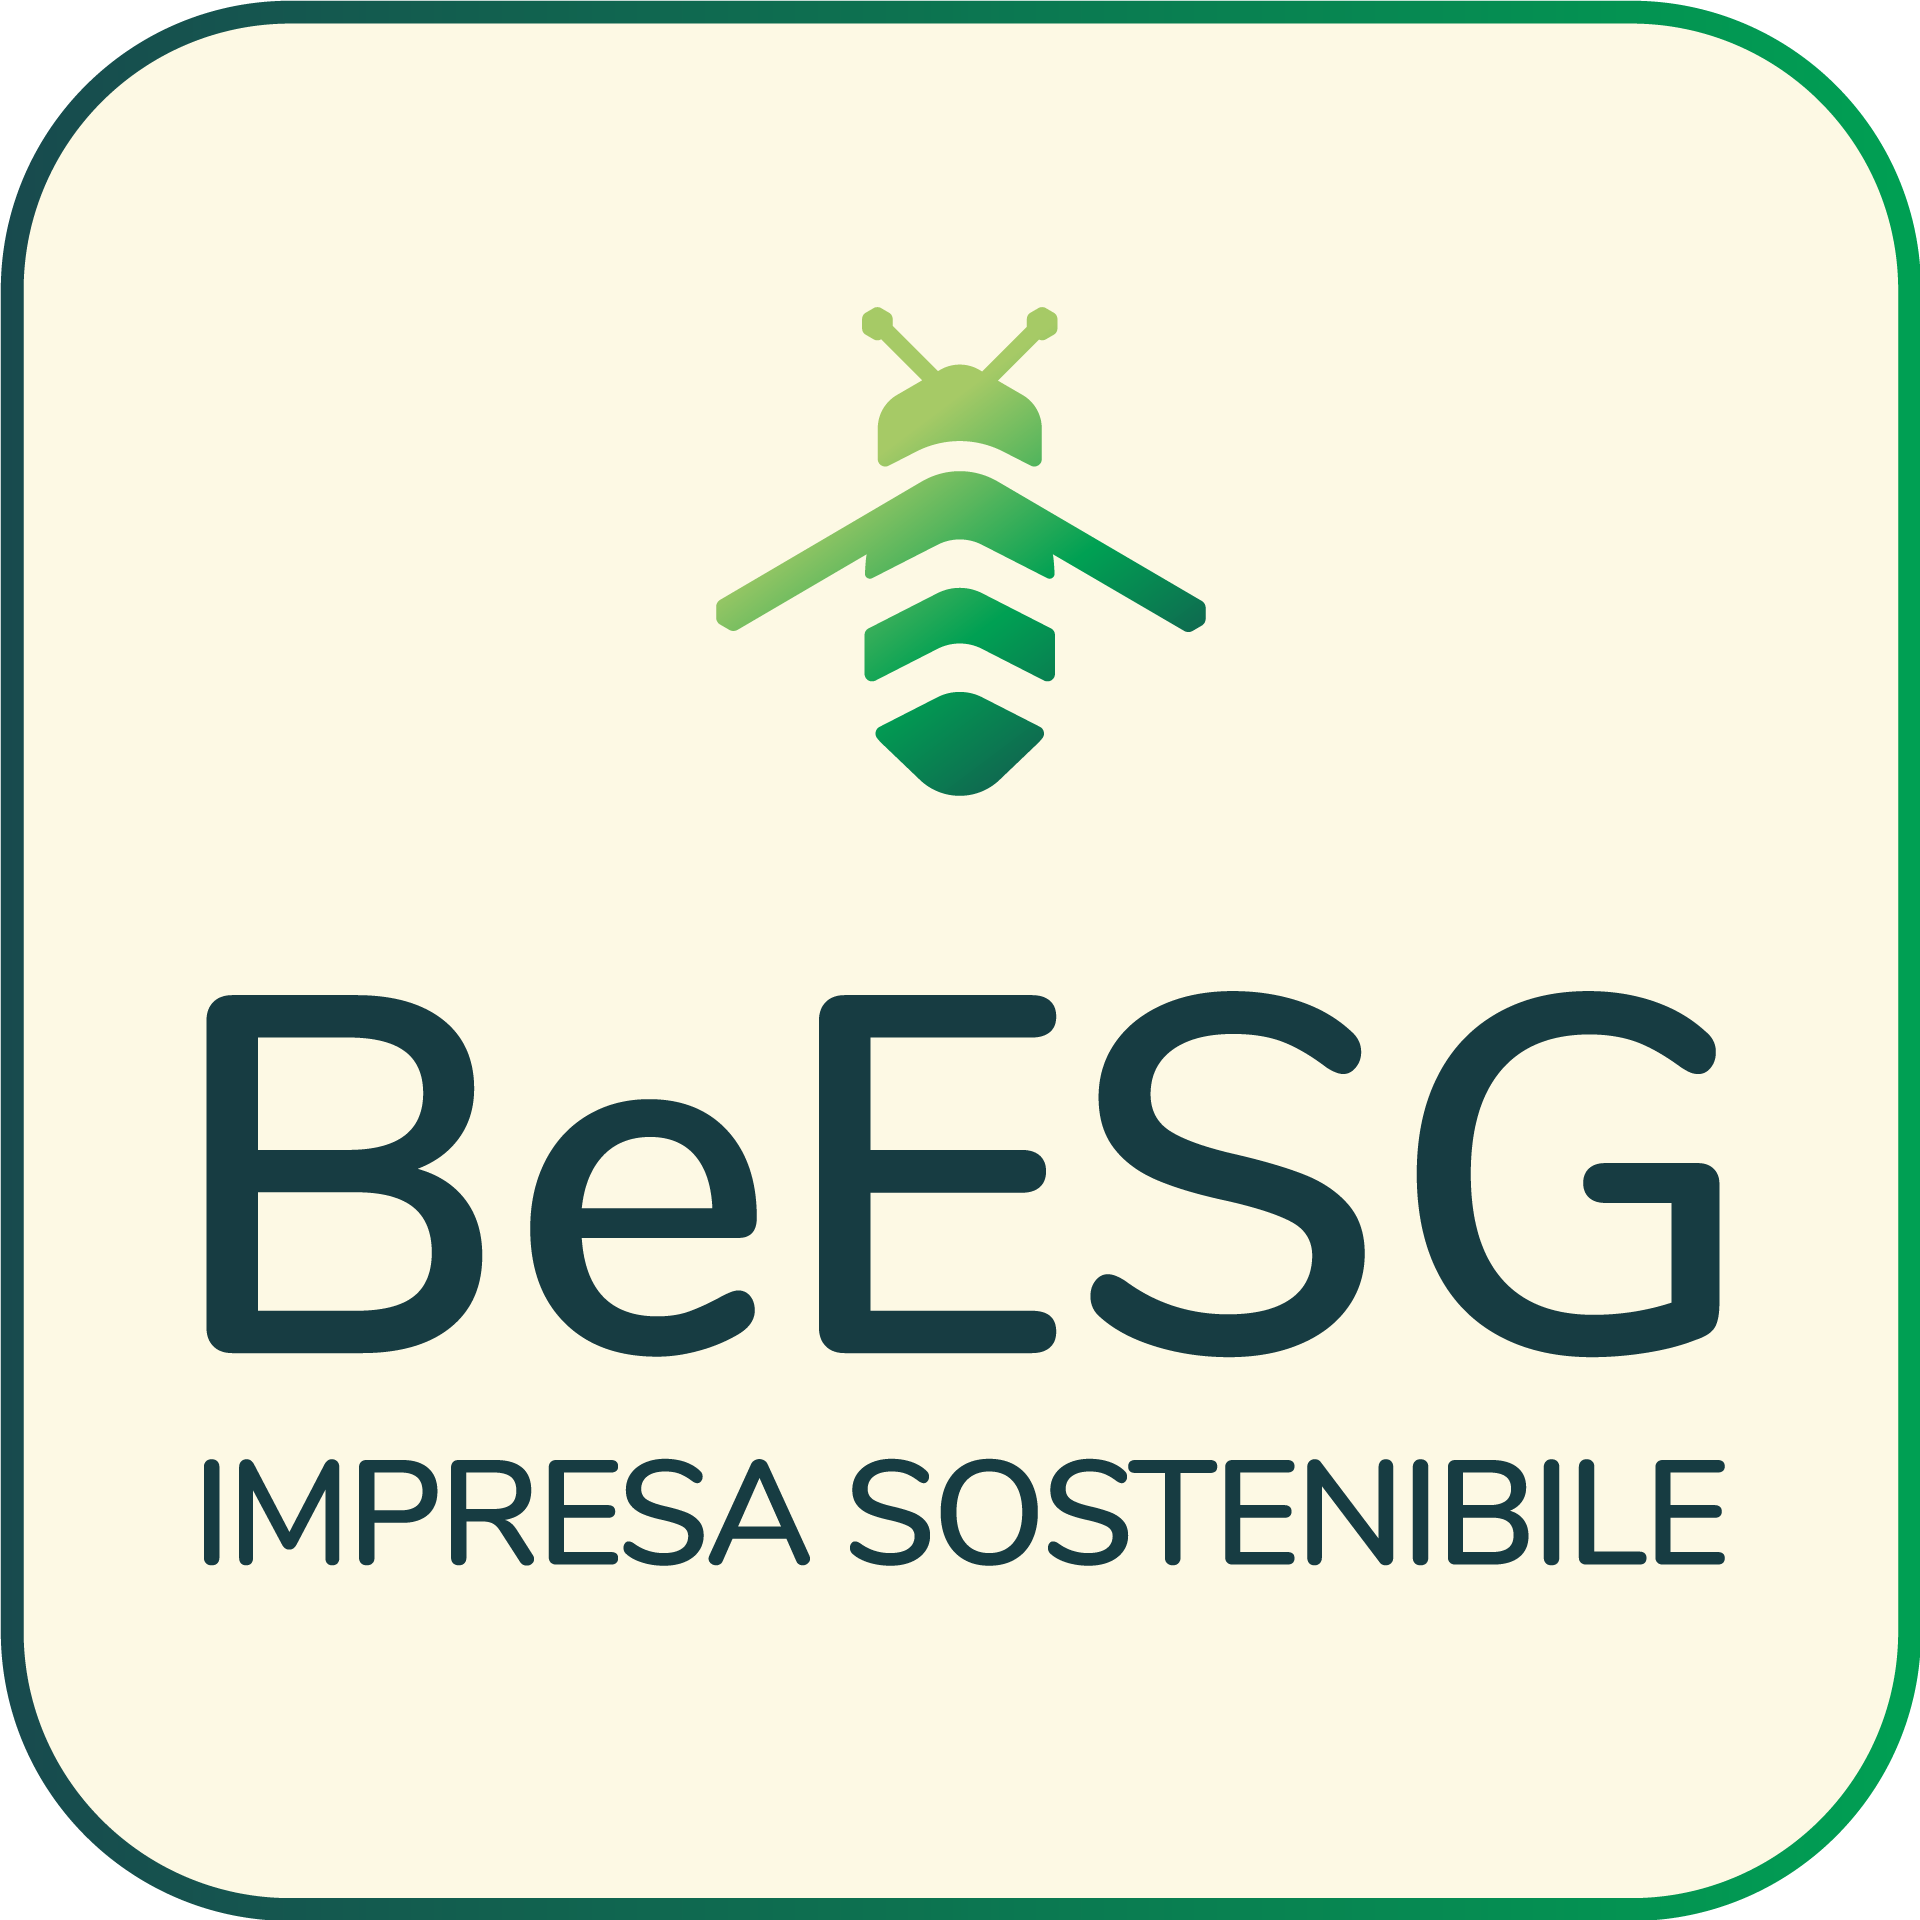 BEESG | Confindustria Toscana Sud